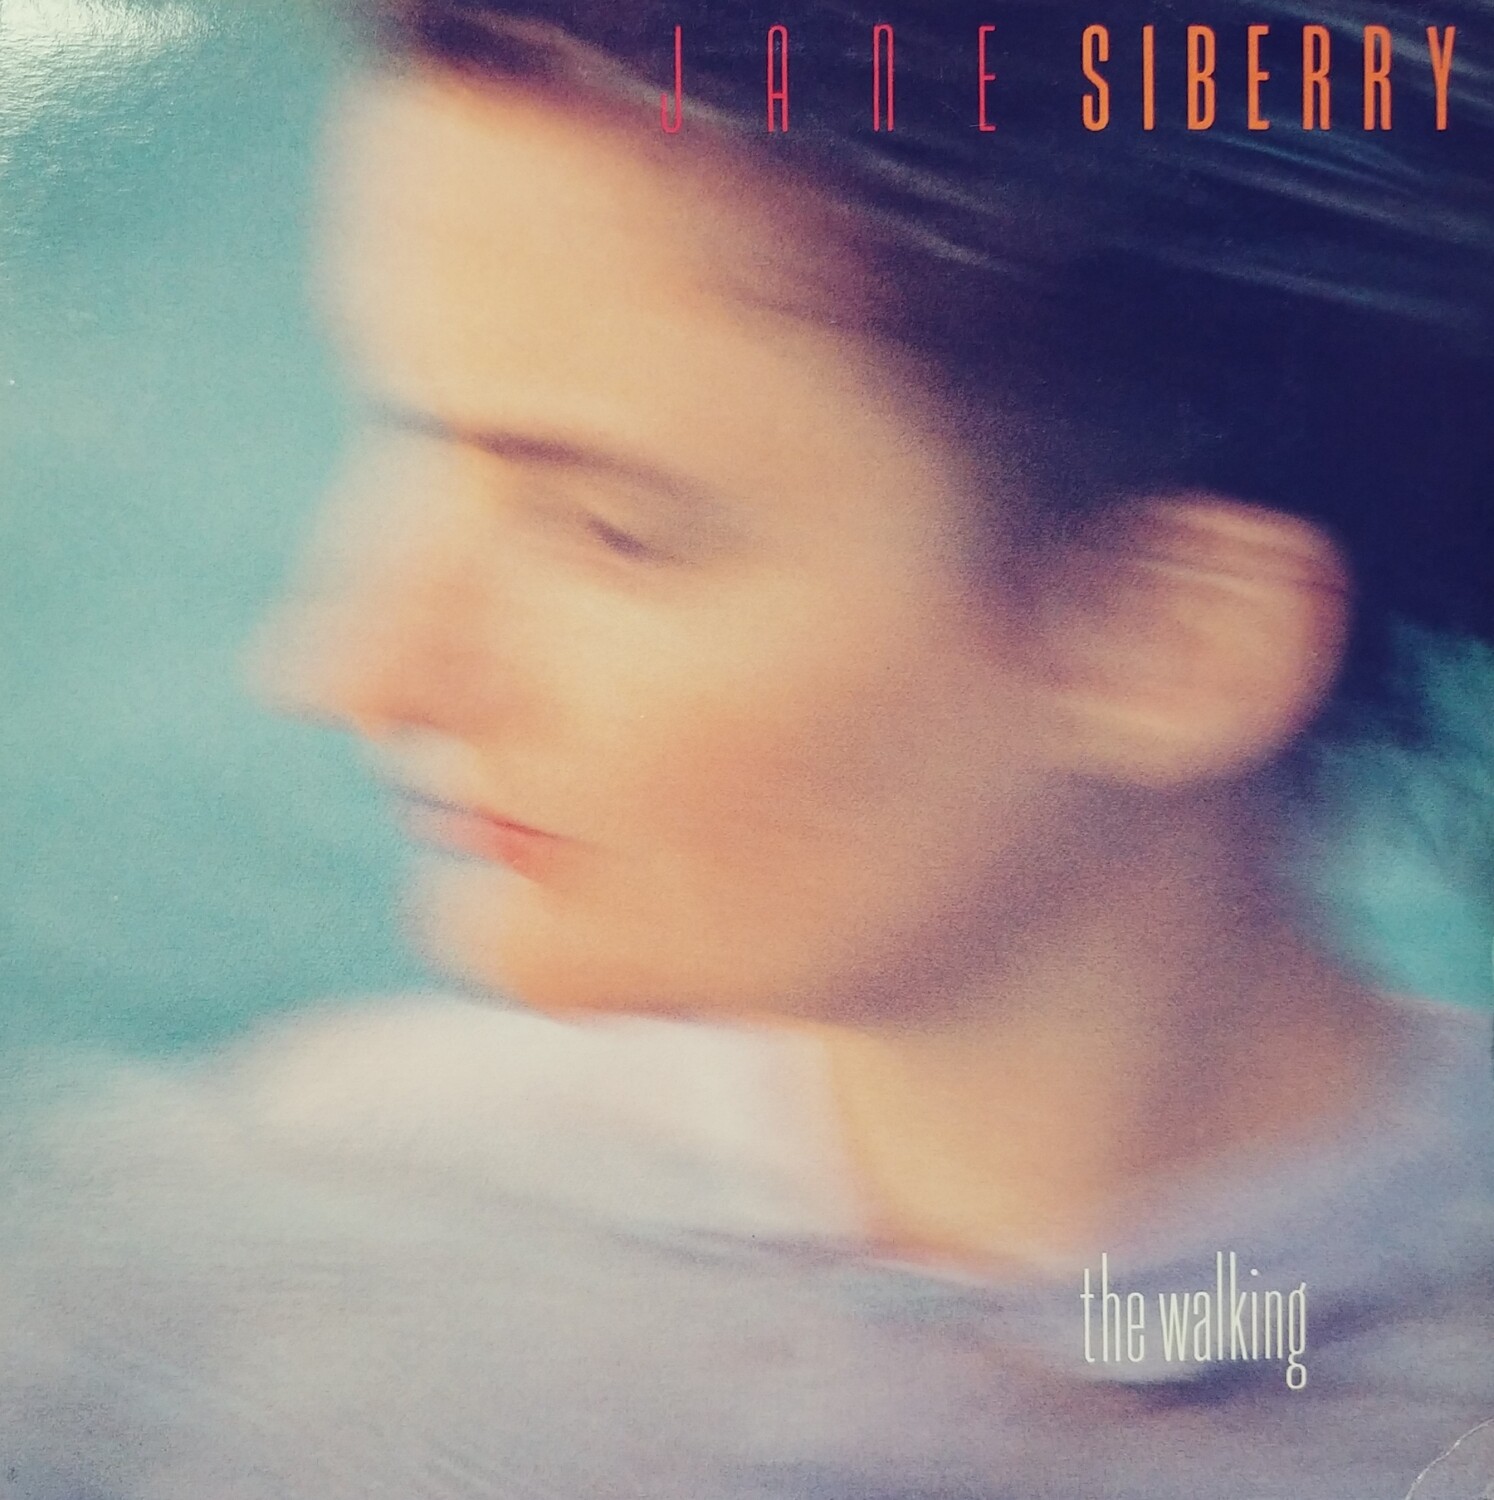 Jane Siberry - The walking